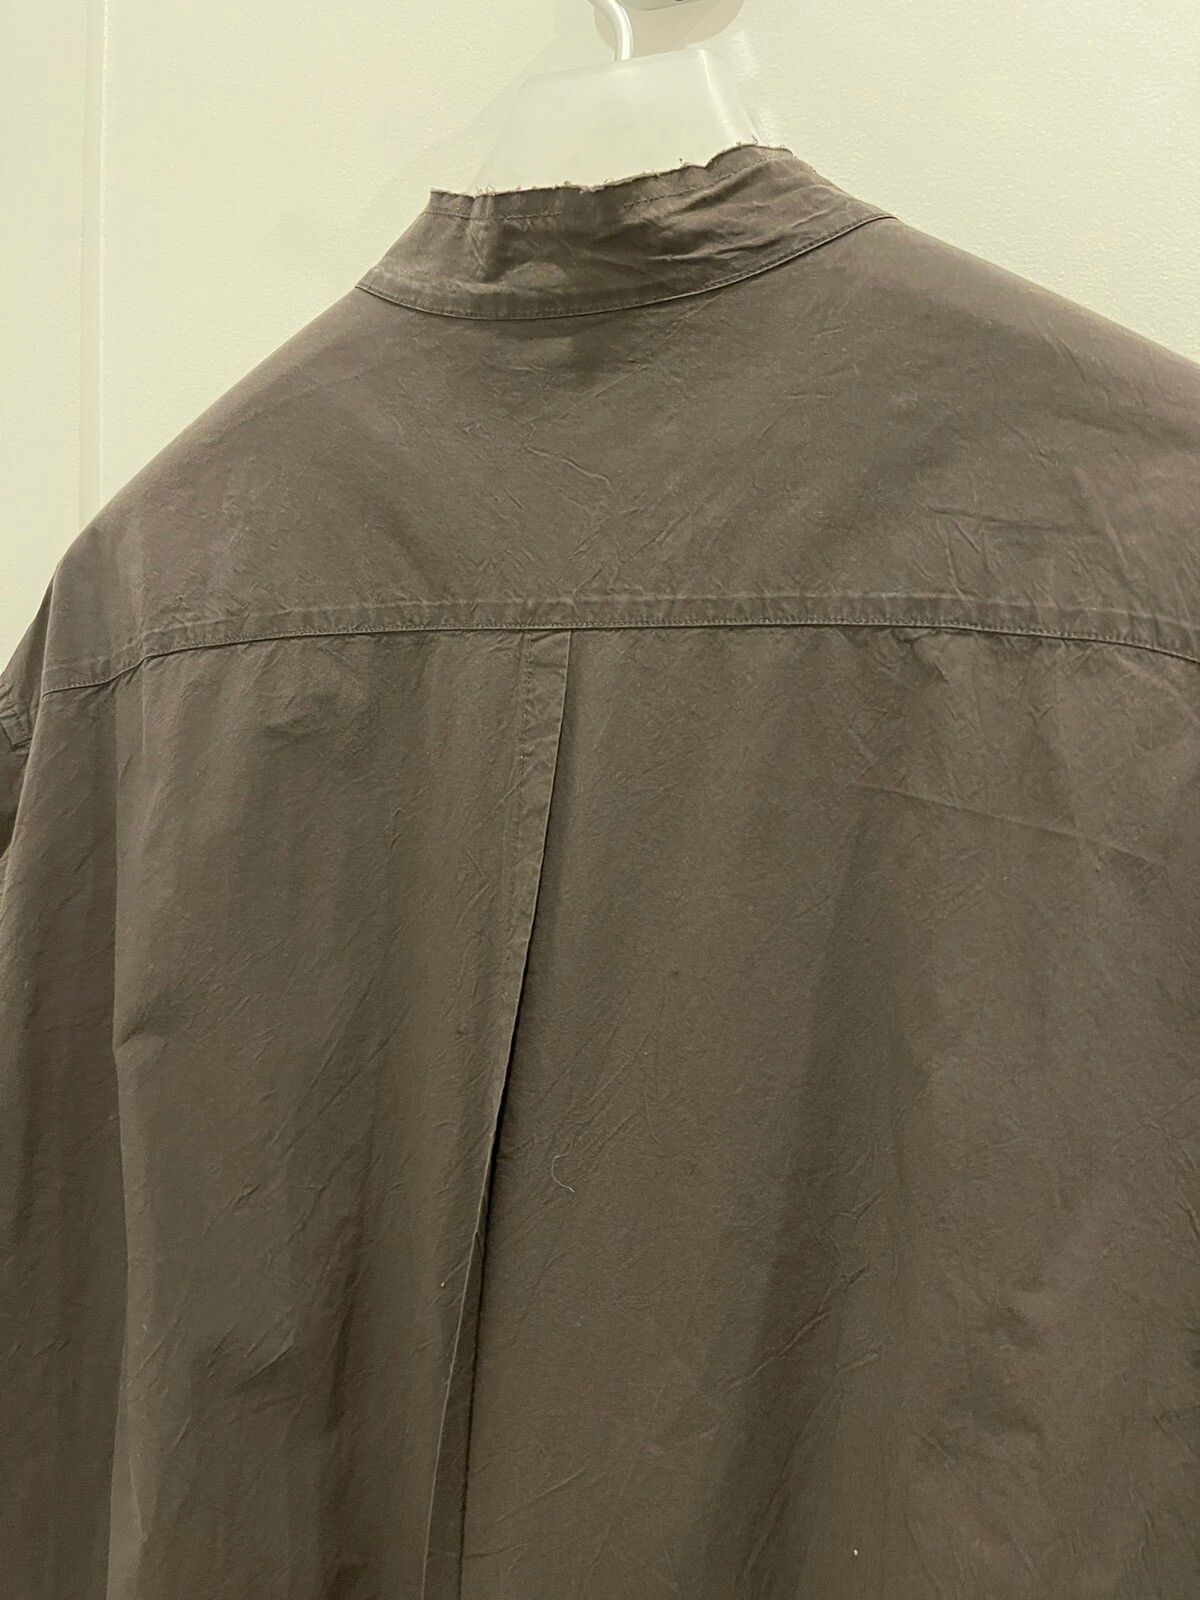 Issey Miyake Last Drop Vintage Raw Edge Stand Collar Overshirt Size US L / EU 52-54 / 3 - 8 Thumbnail